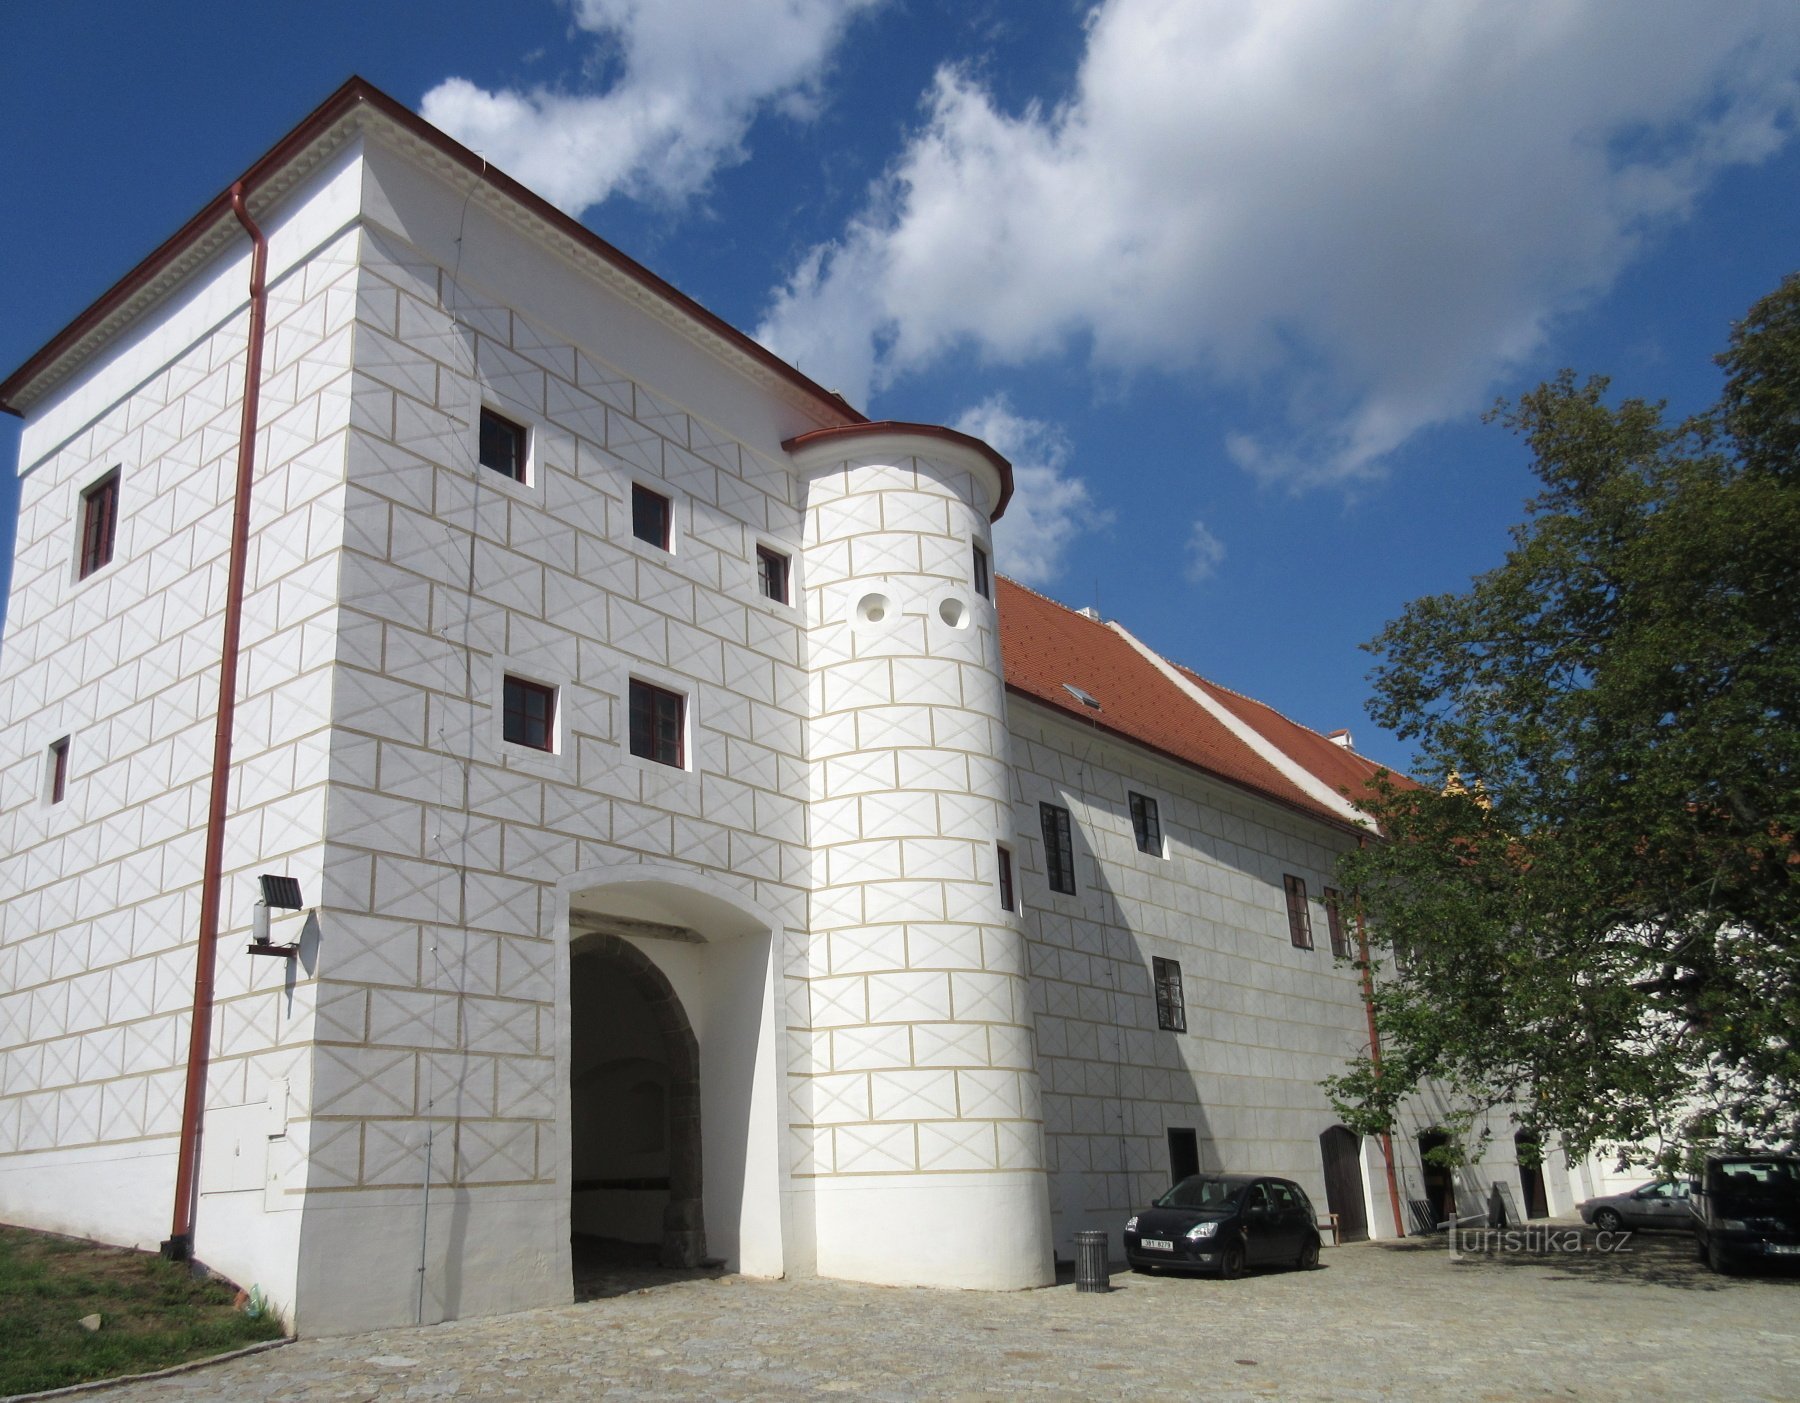 Třebíč – castle, formerly a Benedictine monastery, now a museum